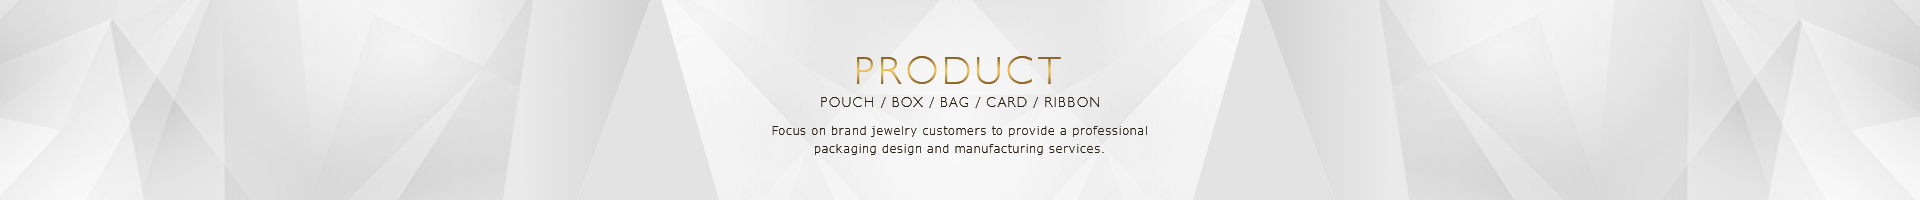 watch box wholesale, custom watch box, watch bag factory